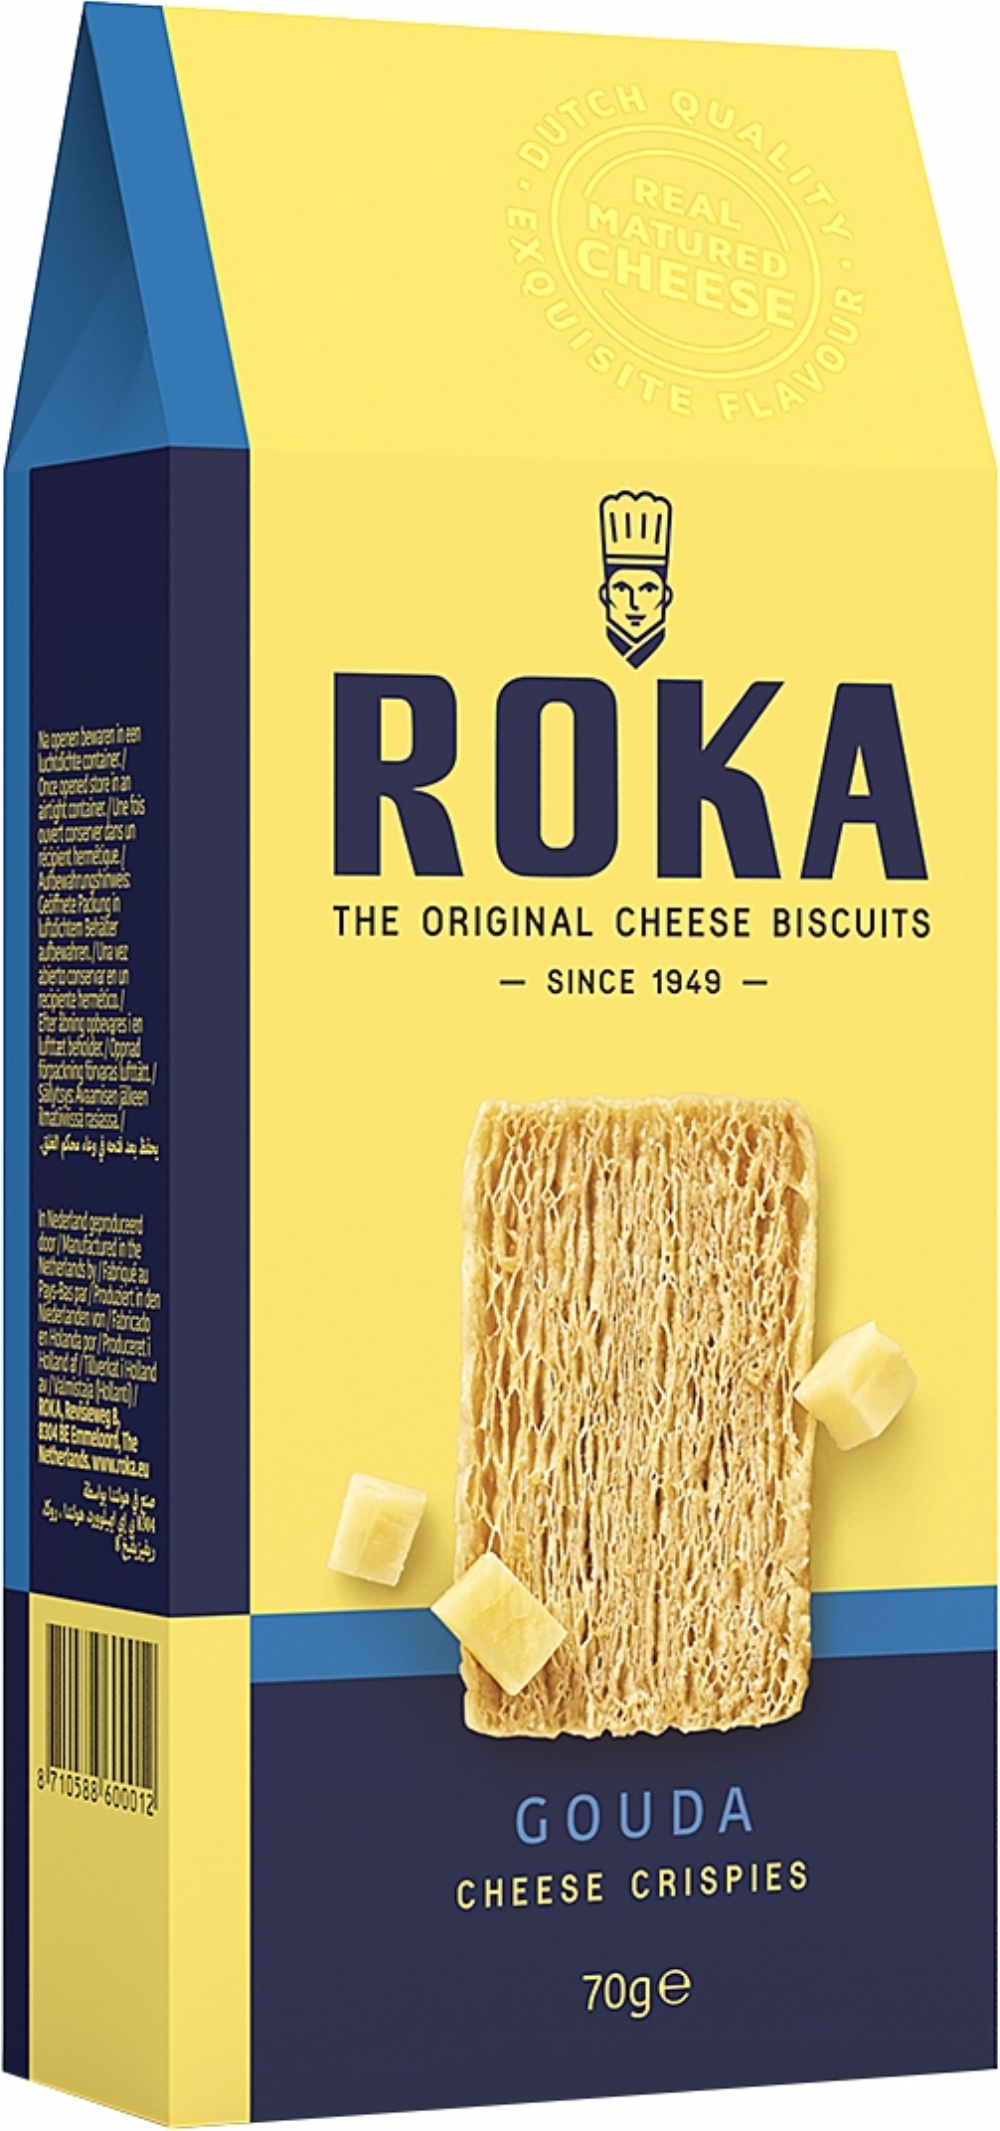 ROKA Gouda Cheese Crispies 70g